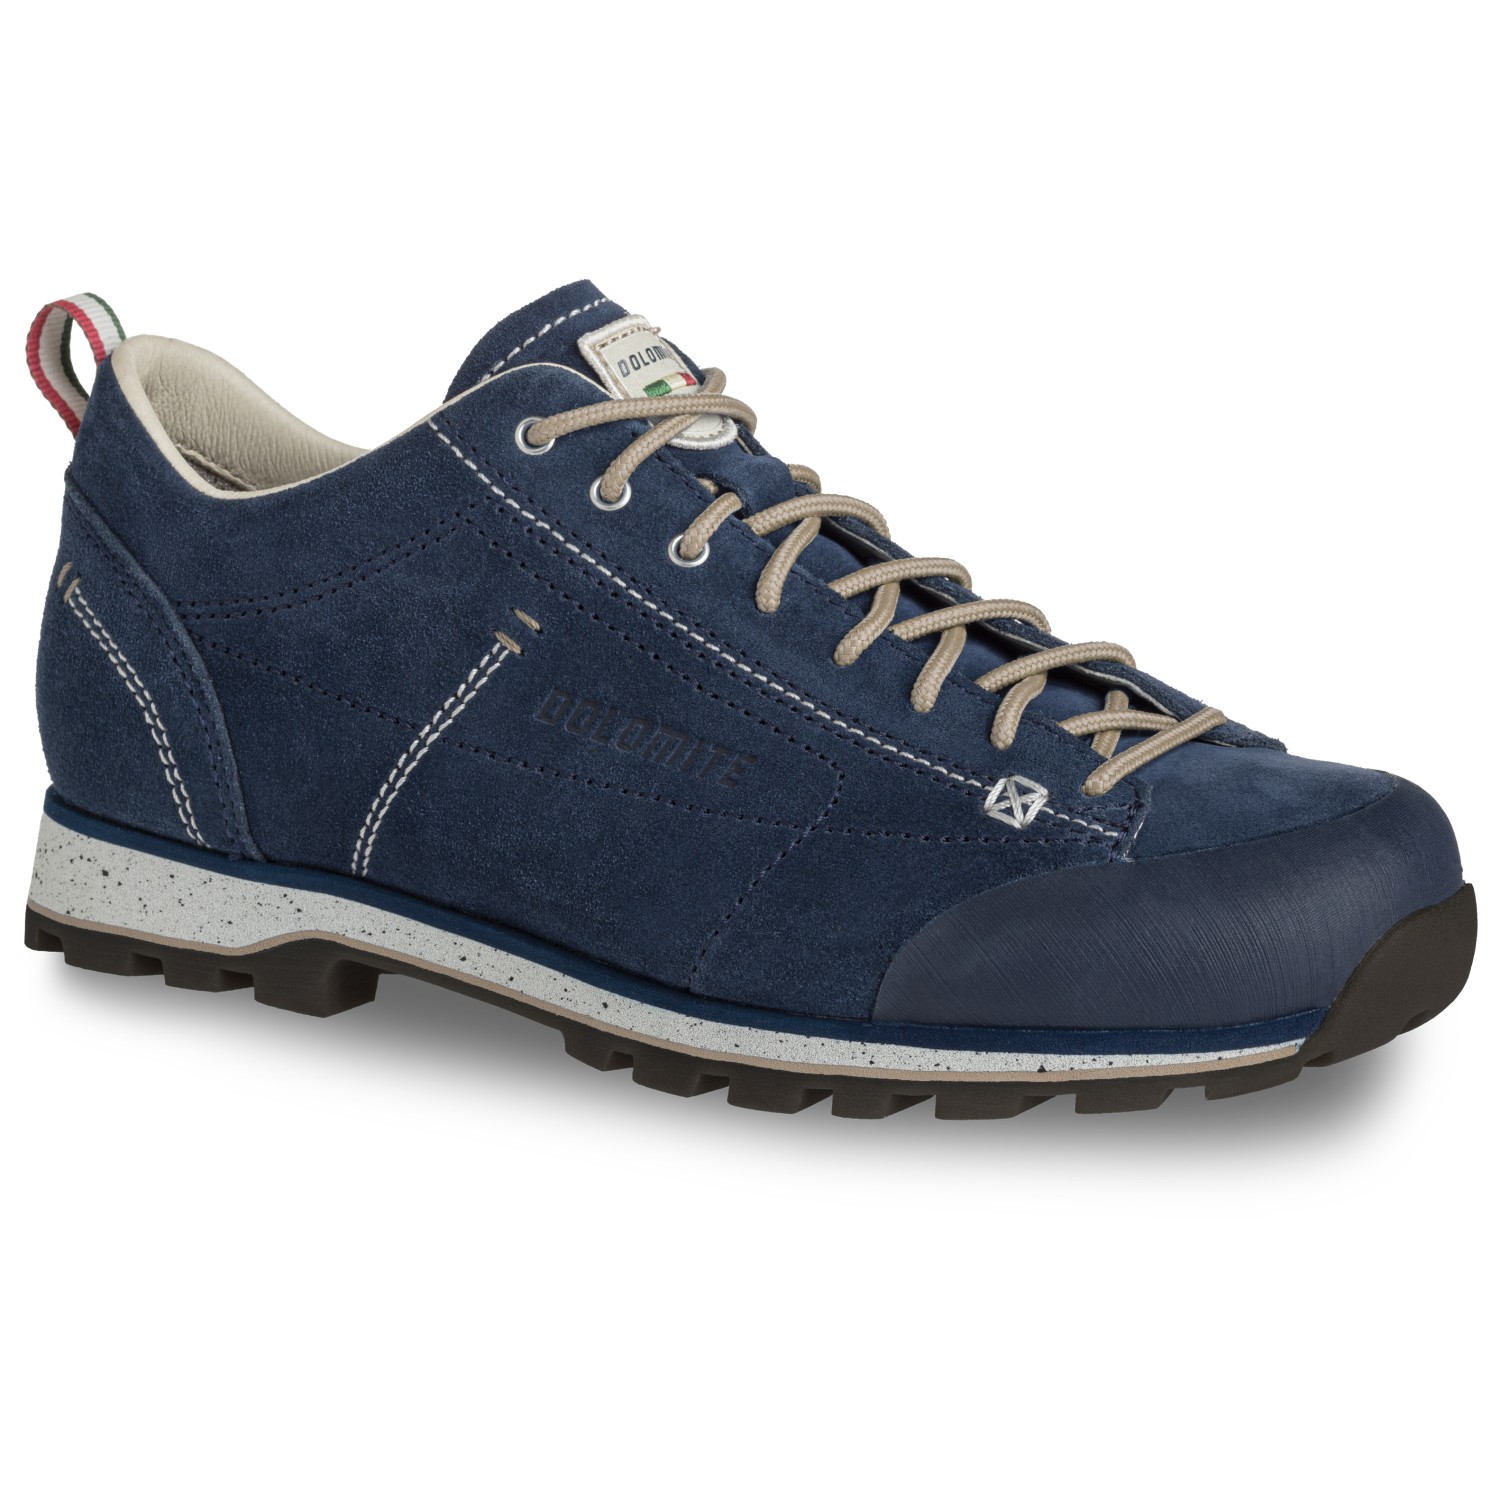 Повседневная обувь Dolomite 54 Low Evo, синий повседневная обувь birkenstock bend low smooth leather le белый